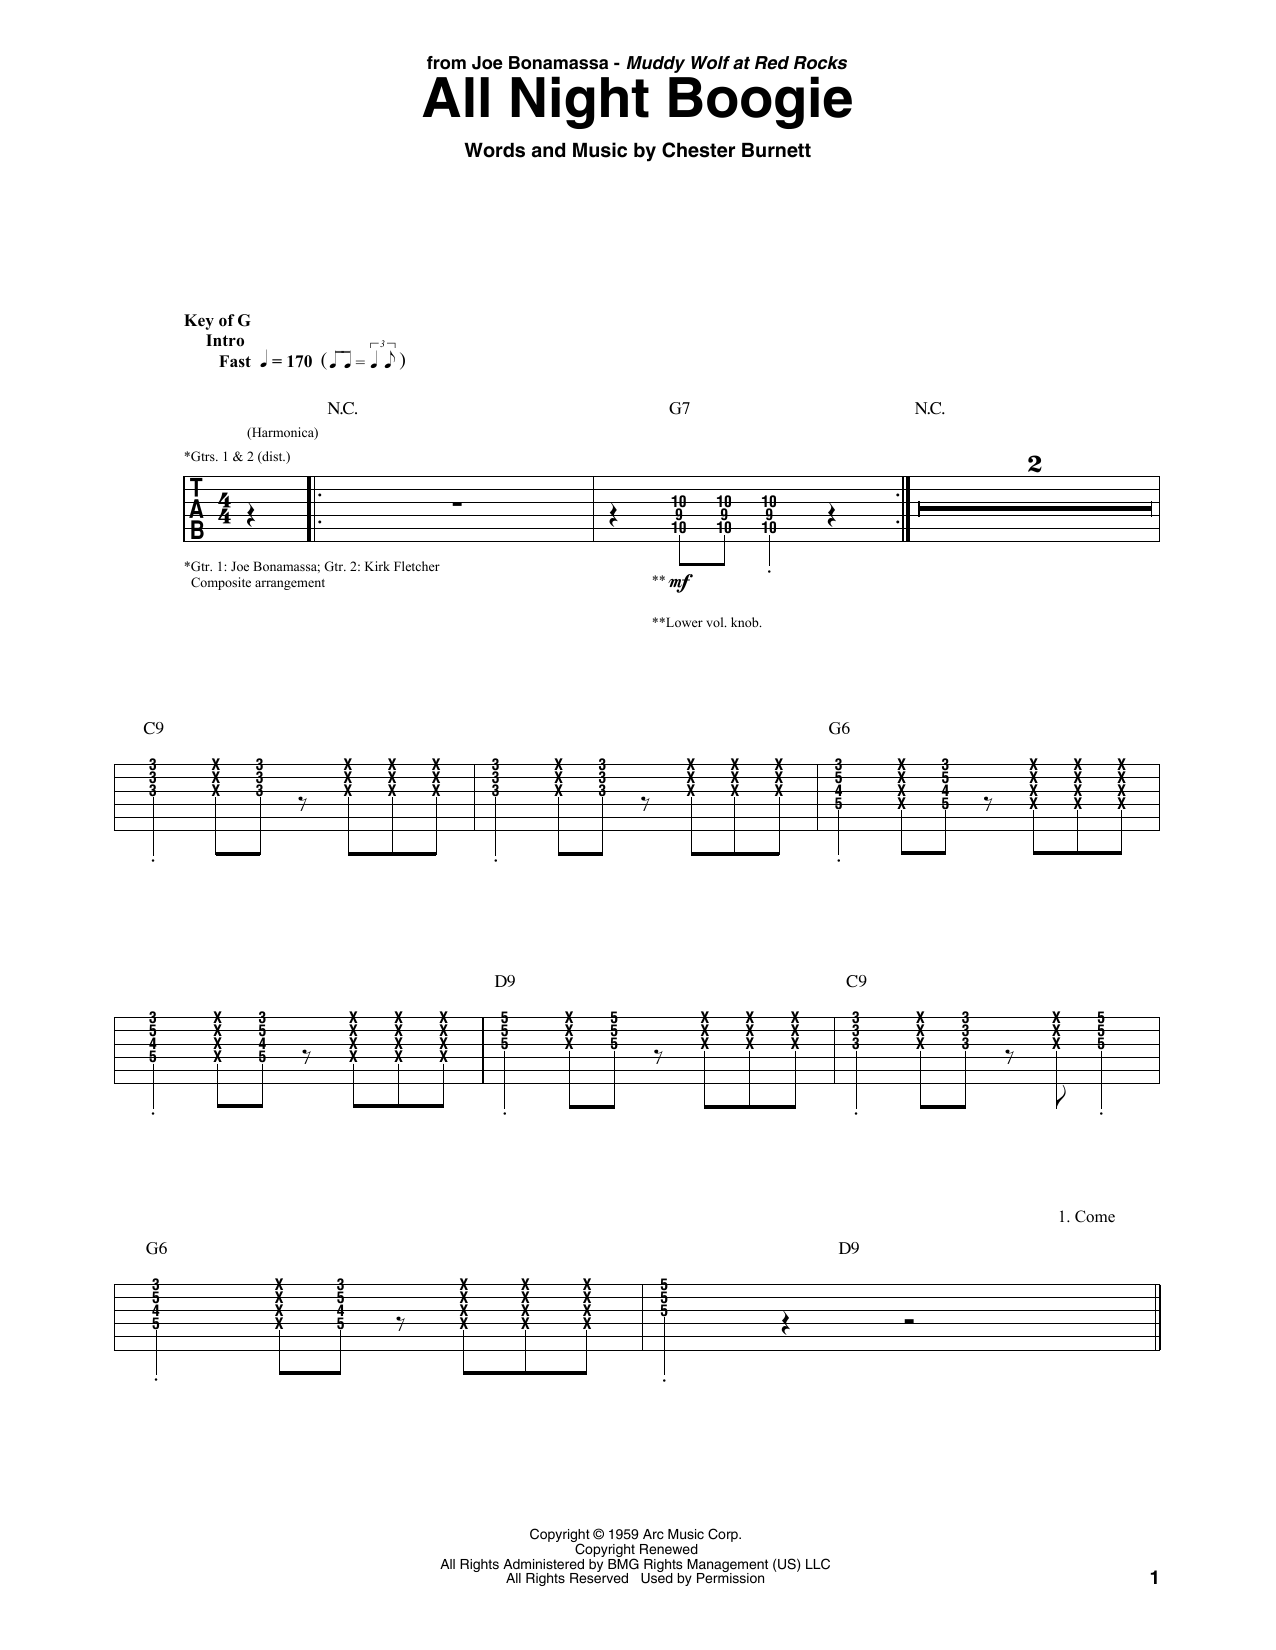 Download Joe Bonamassa All Night Boogie Sheet Music and learn how to play Guitar Tab PDF digital score in minutes